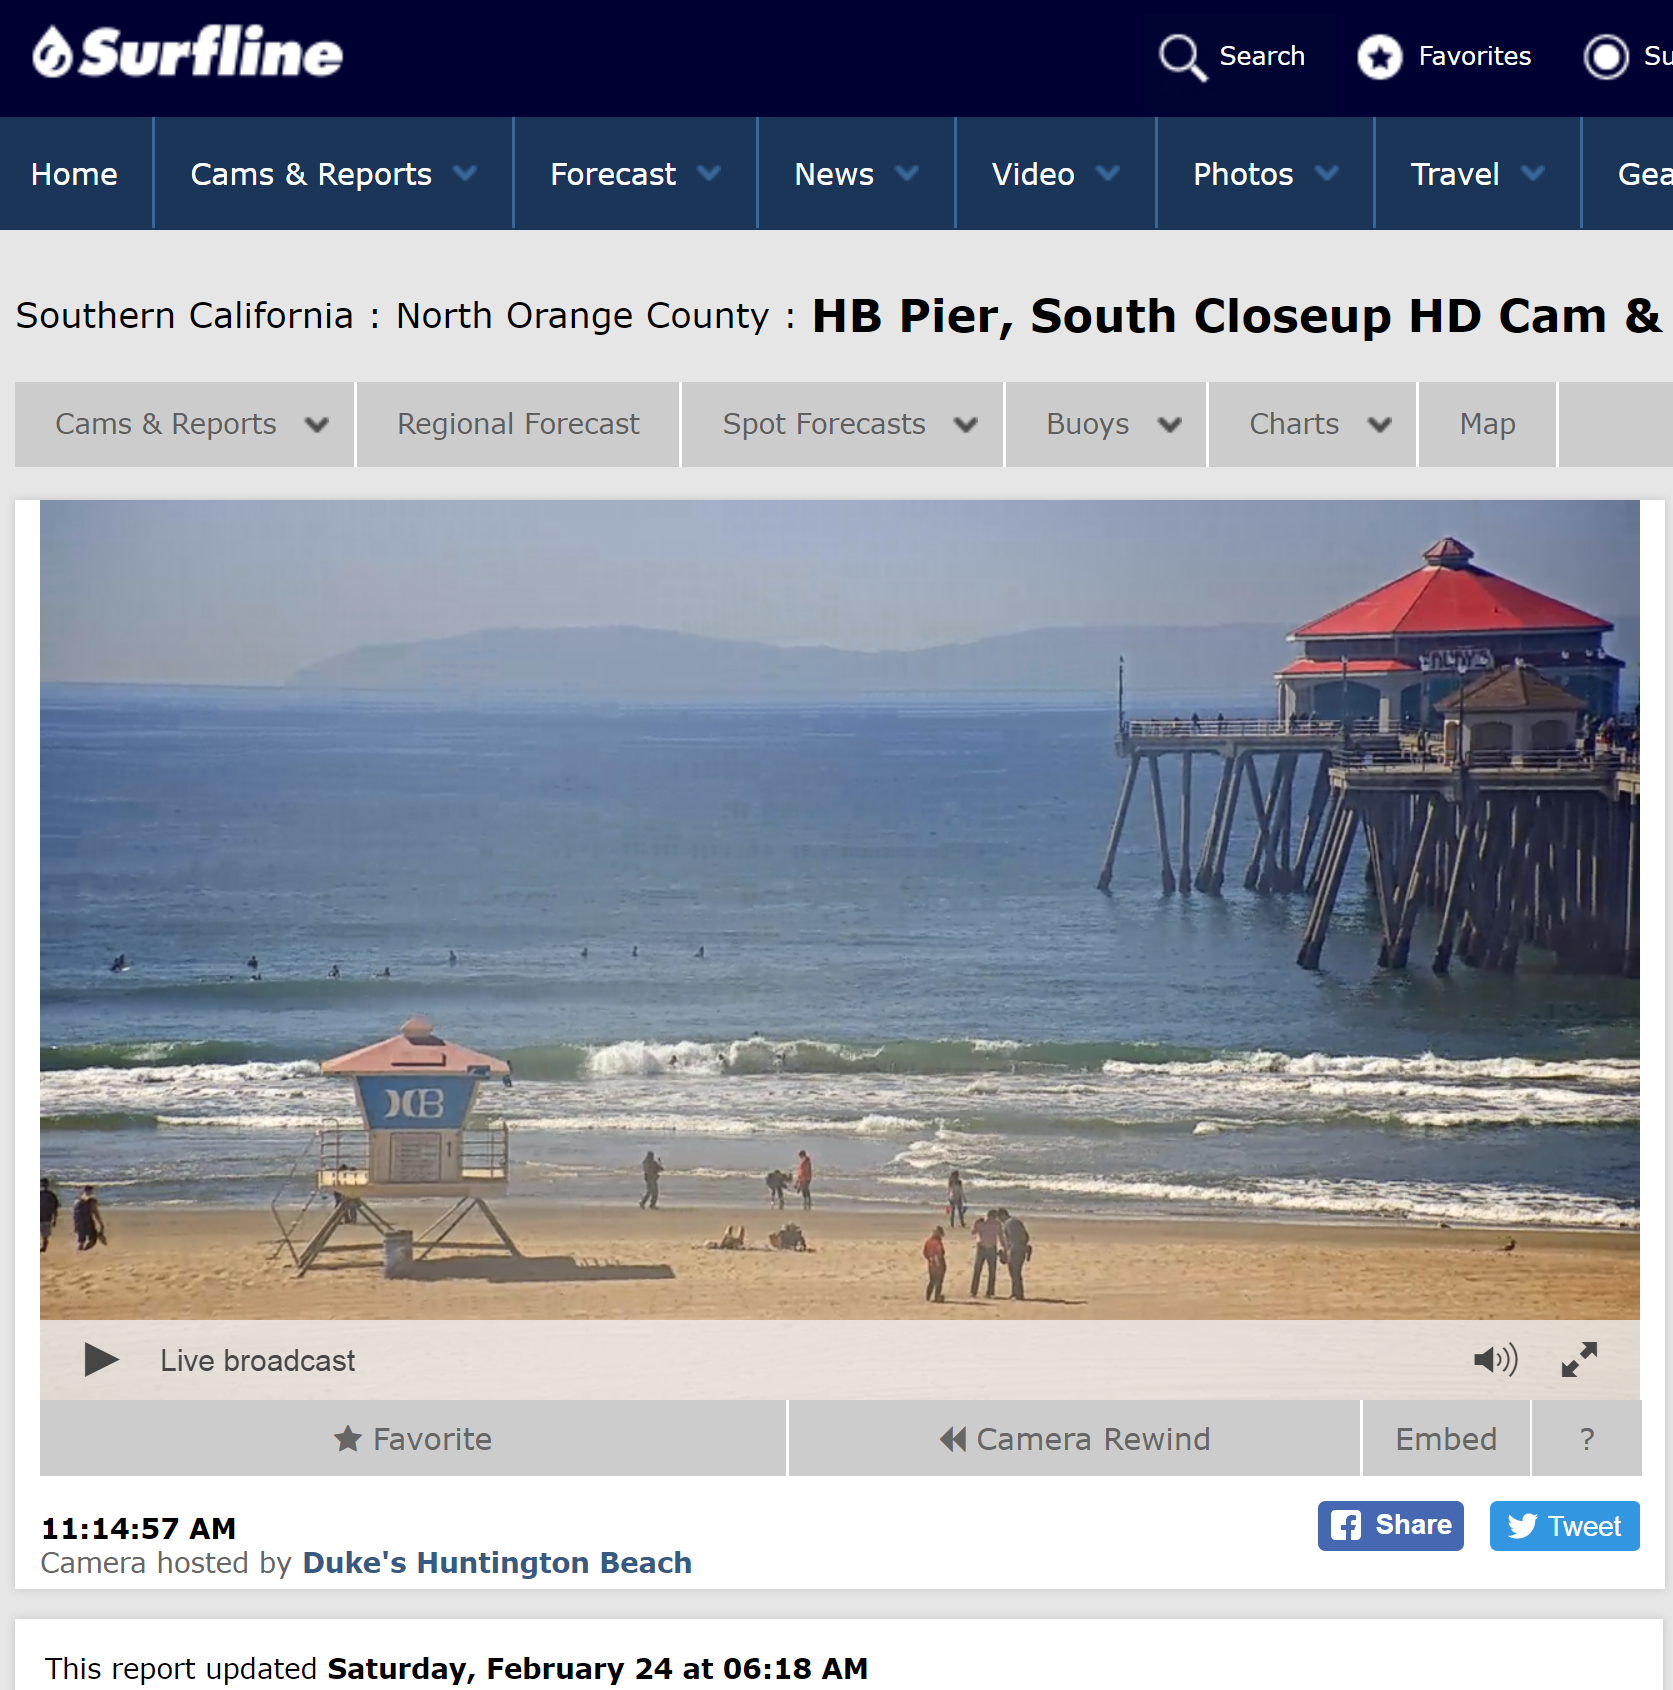 Southern California :North Orange County:HB Pier, South Closeup HD Cam & Surf Report Favorite